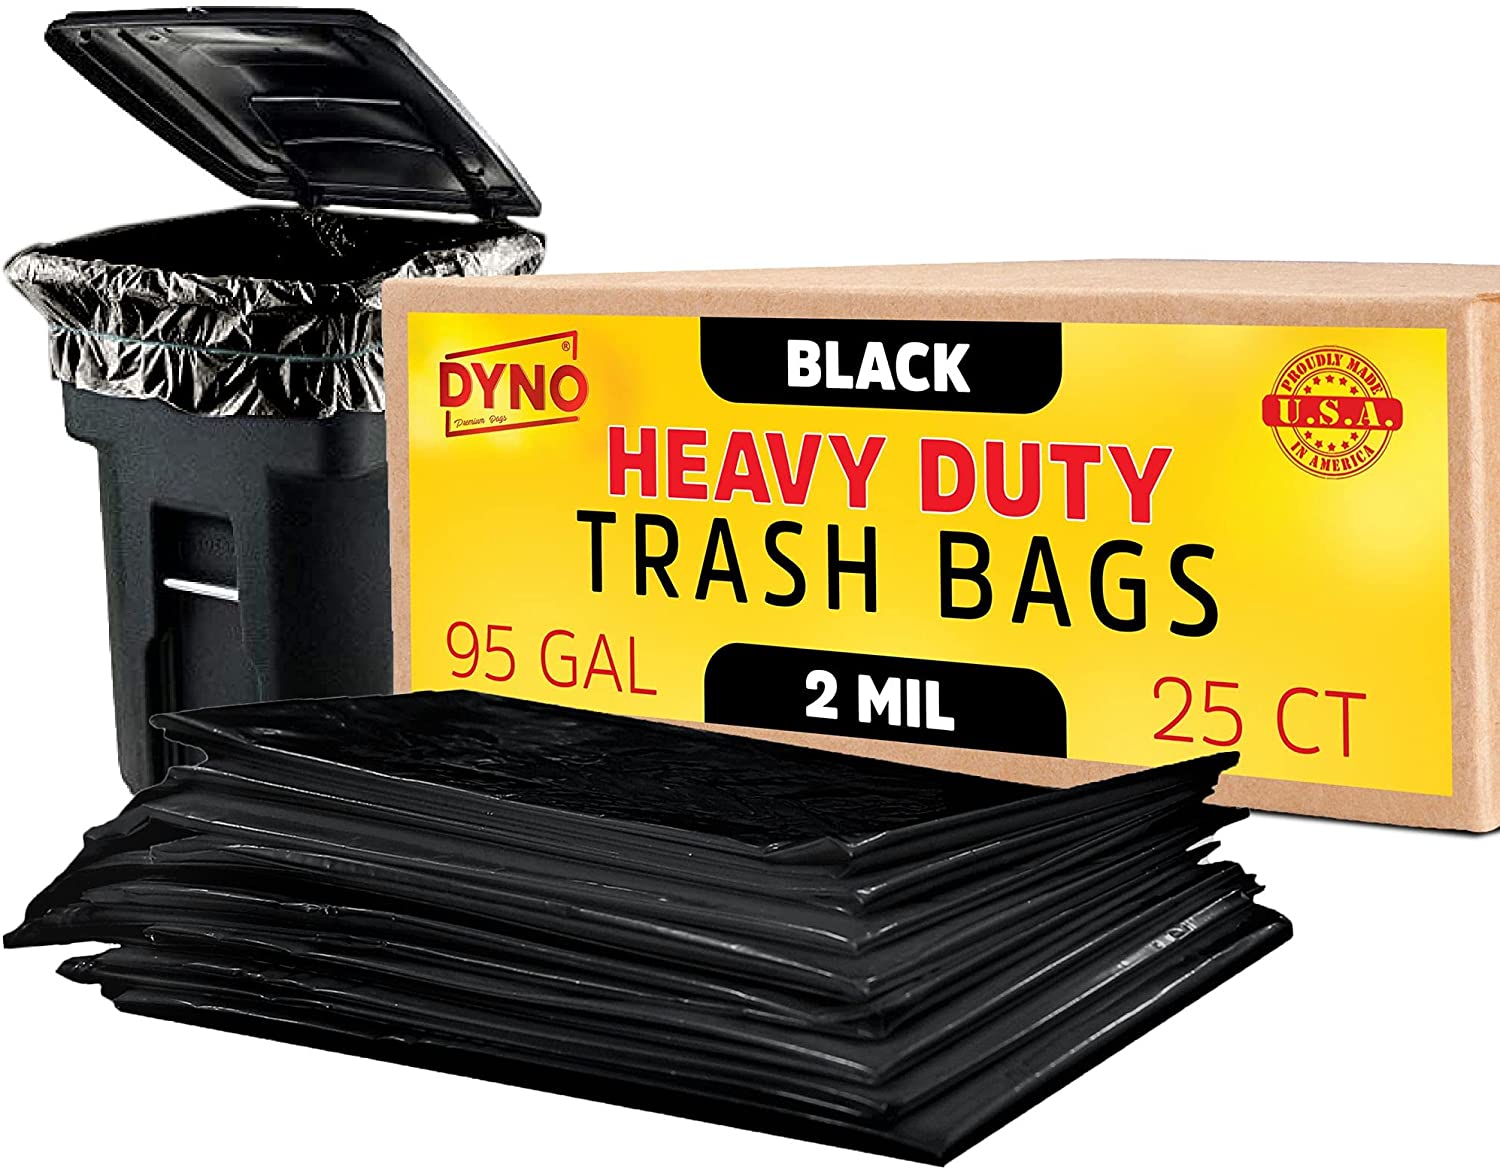 Veska 95 Gallon Trash Bags (Huge 50 Bags w/Ties) 95-96 Gallon Trash Bags Large Black Heavy Duty Can Liners, Large 90 gal, 95 gal, 96 Gal,100 Gallon